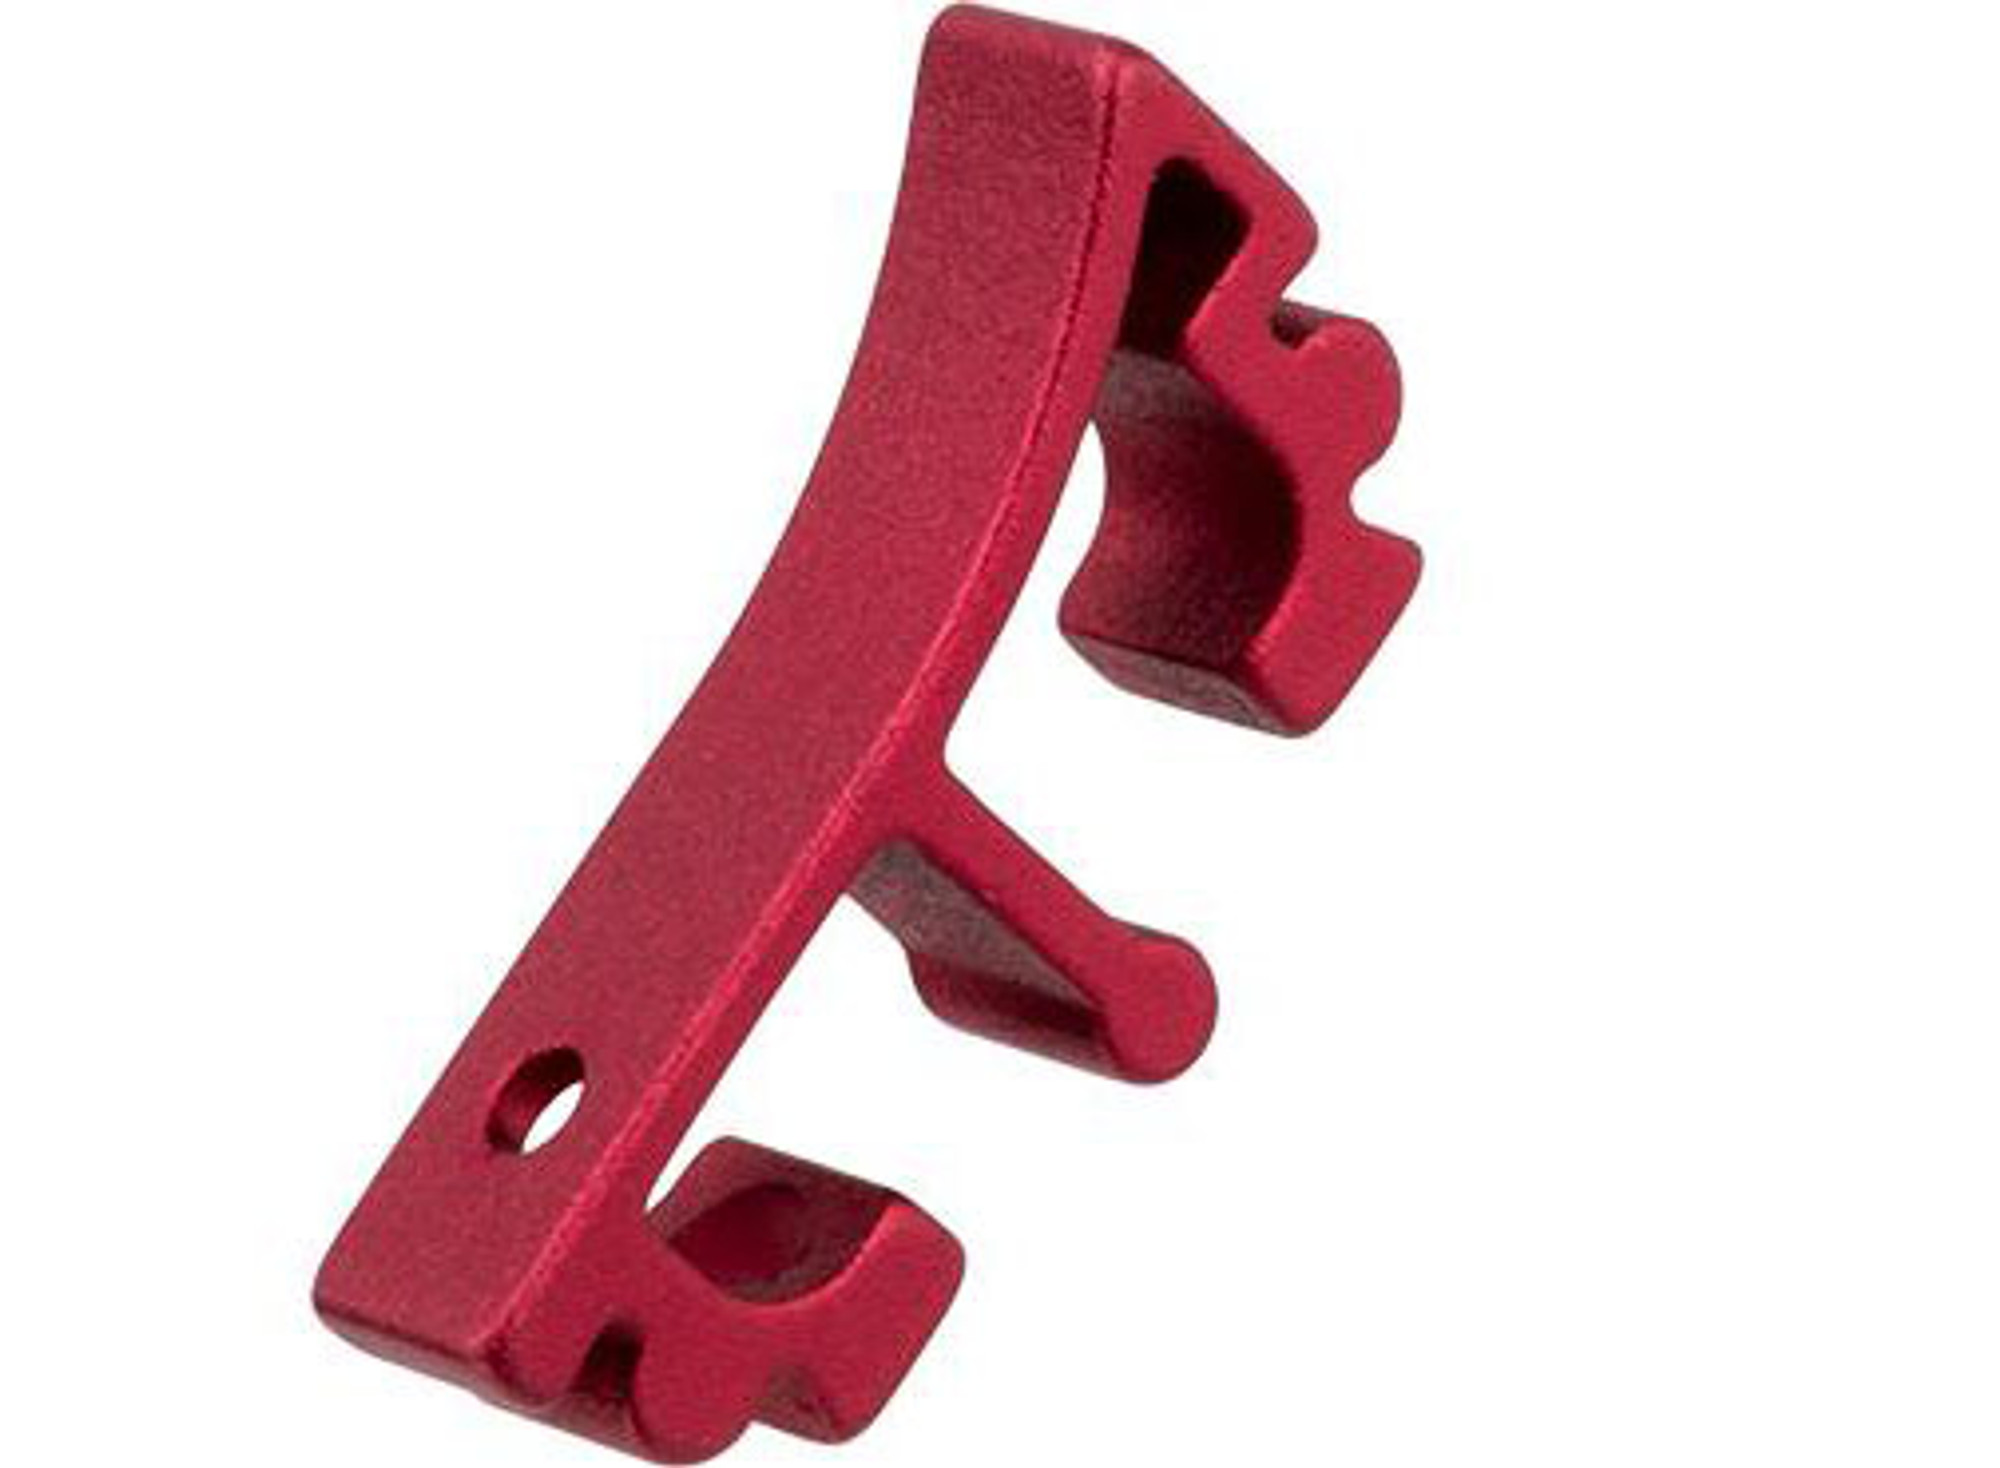 Airsoft Masterpiece Aluminum Puzzle Trigger - Enos (Color: Red)